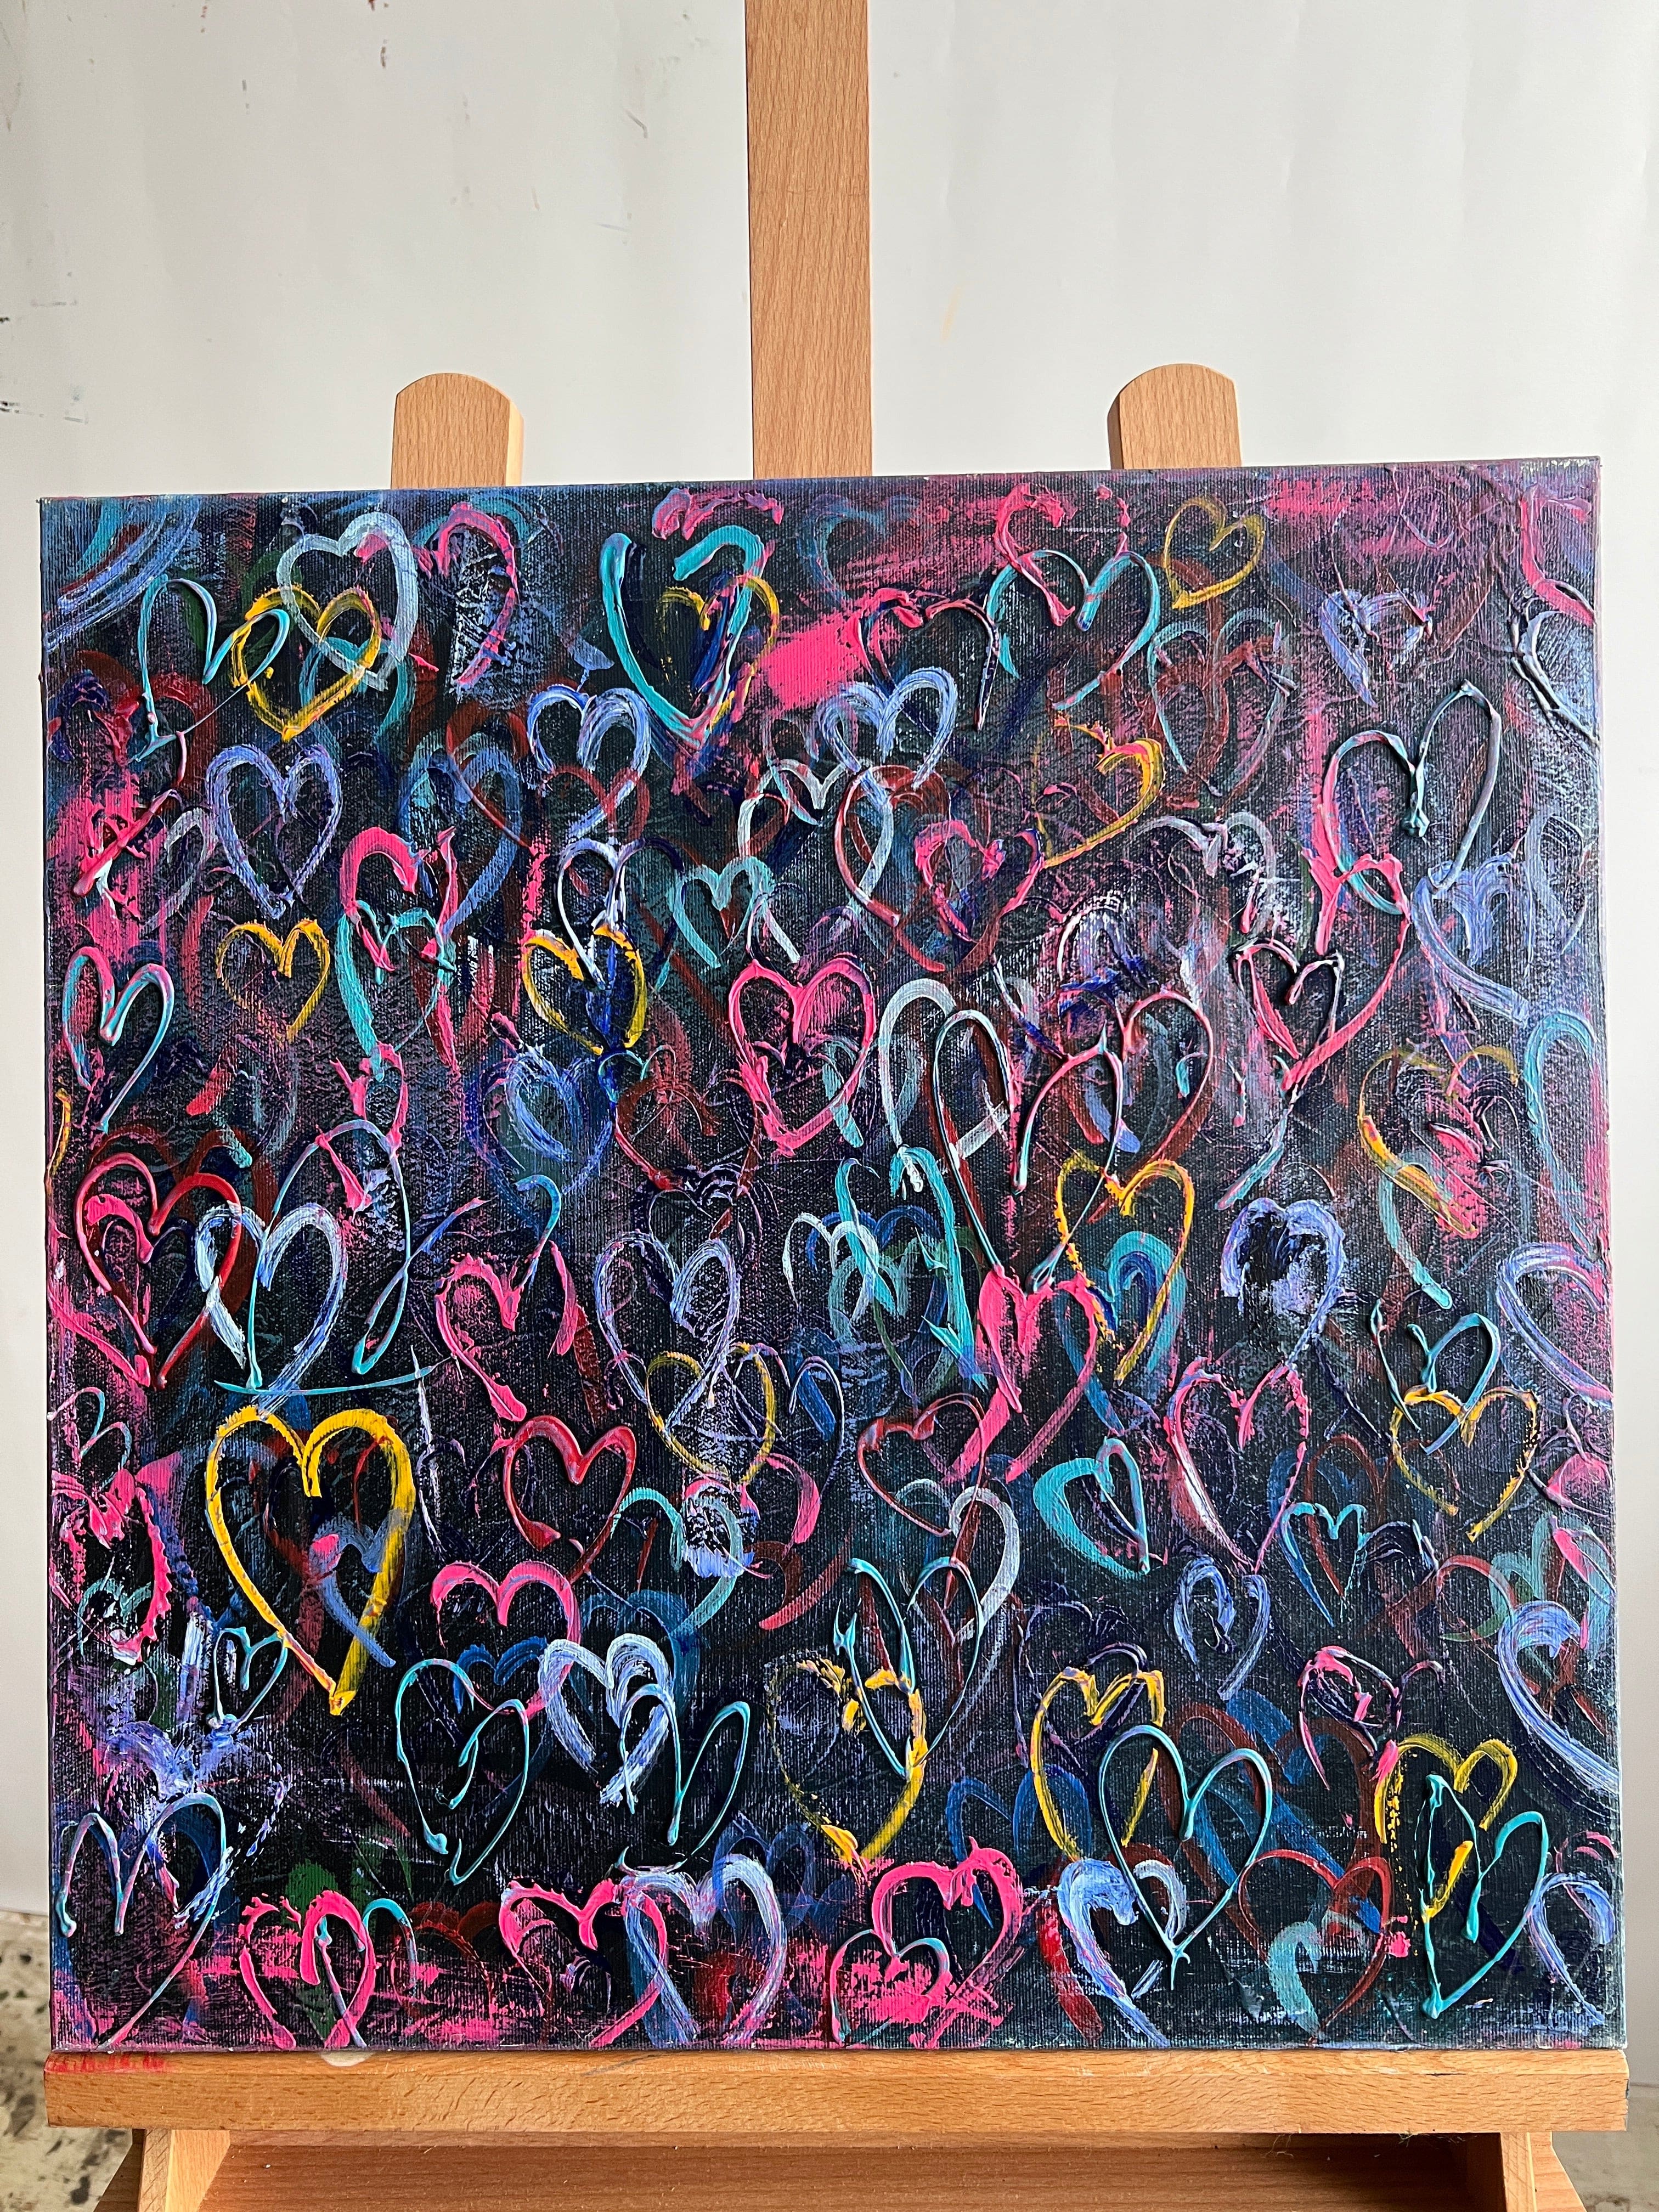 Bleeding Hearts Oil painting